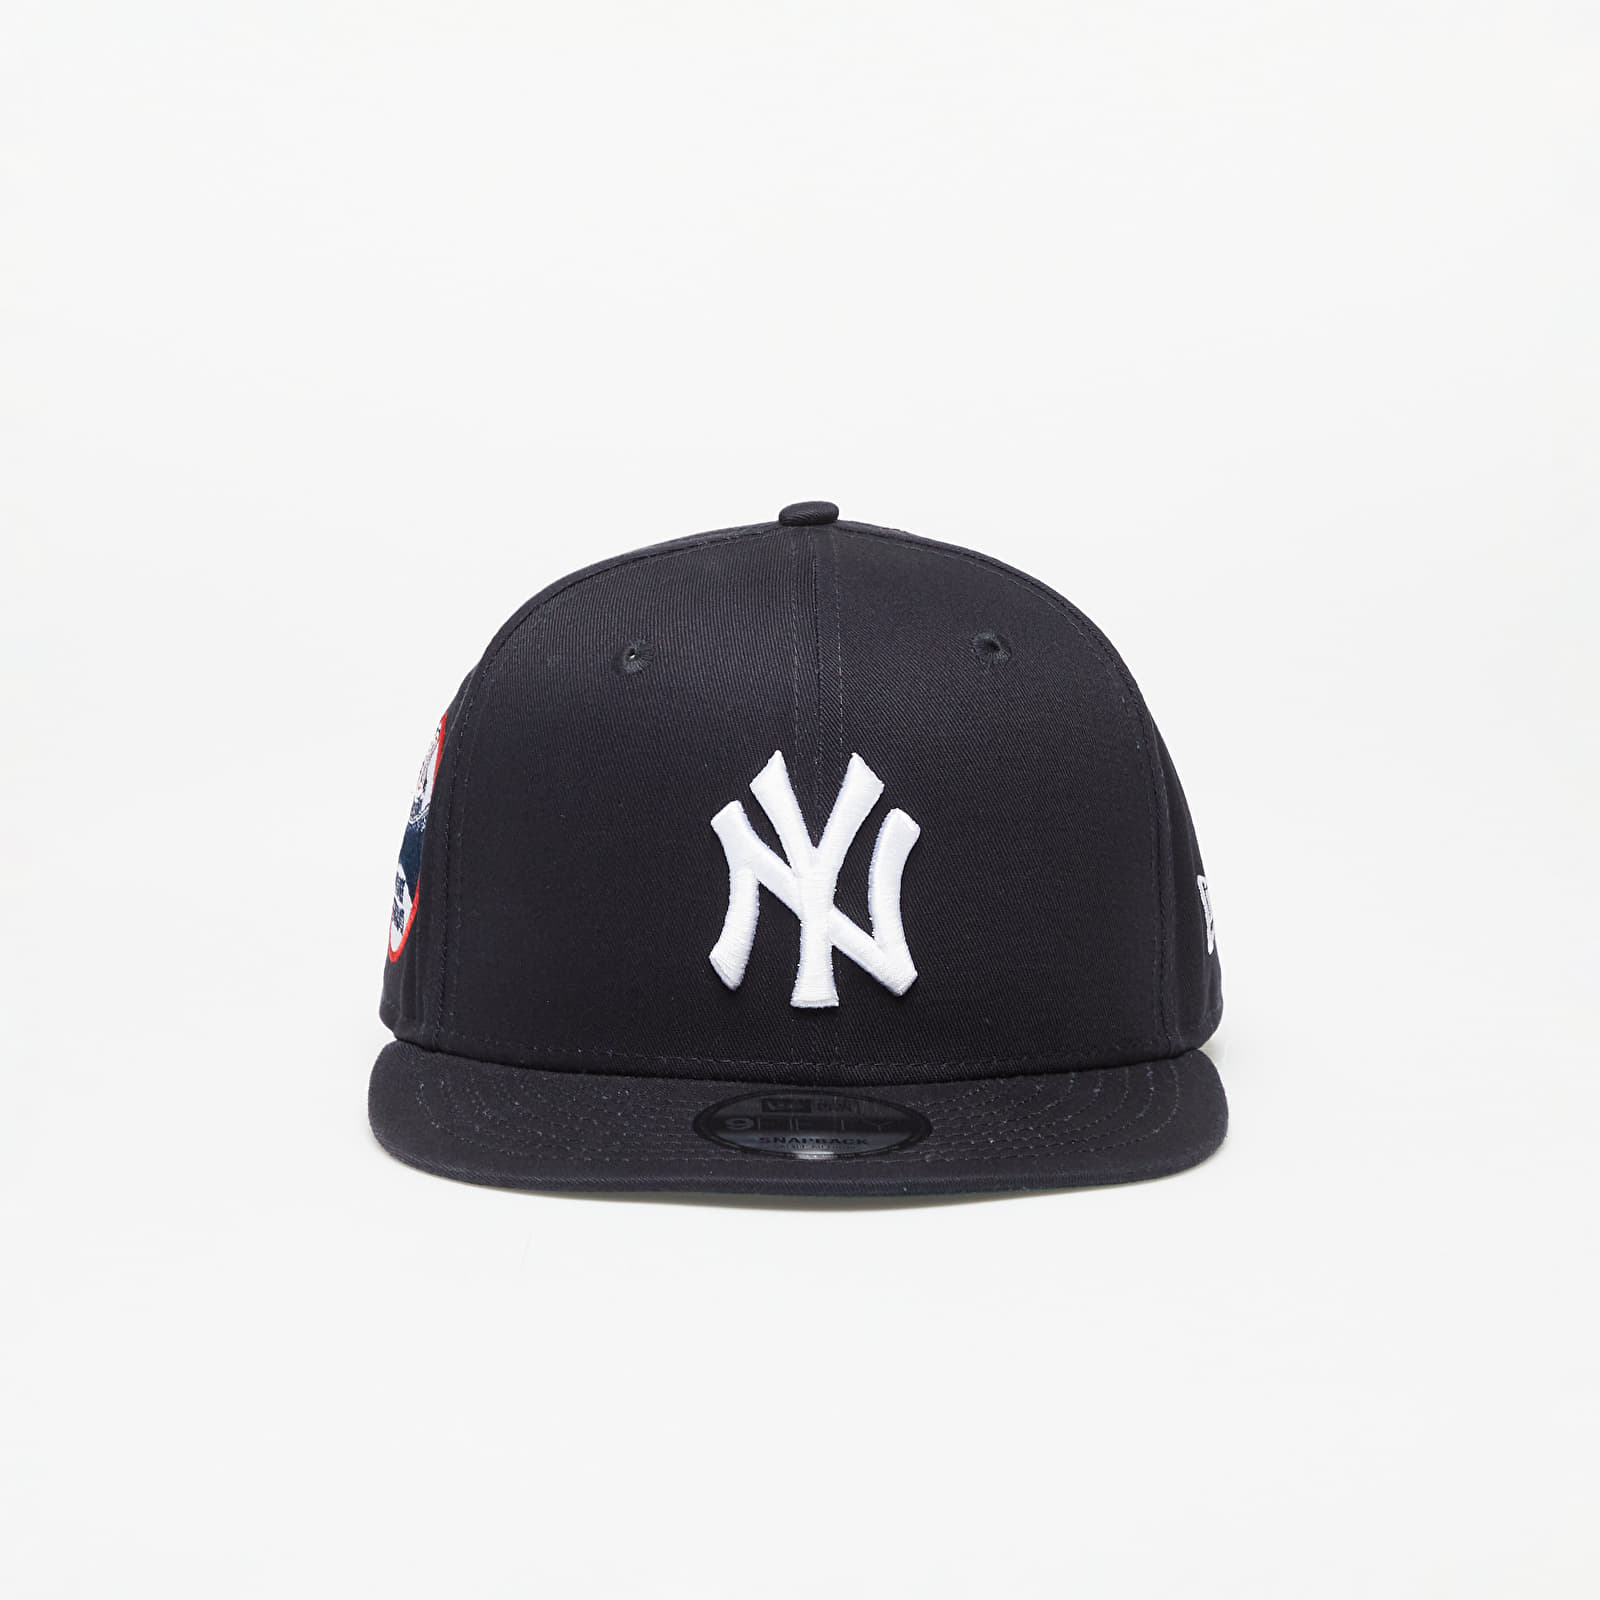 Caps New Era New York Yankees New Traditions 9FIFTY Snapback Cap Navy/ Kelly Green